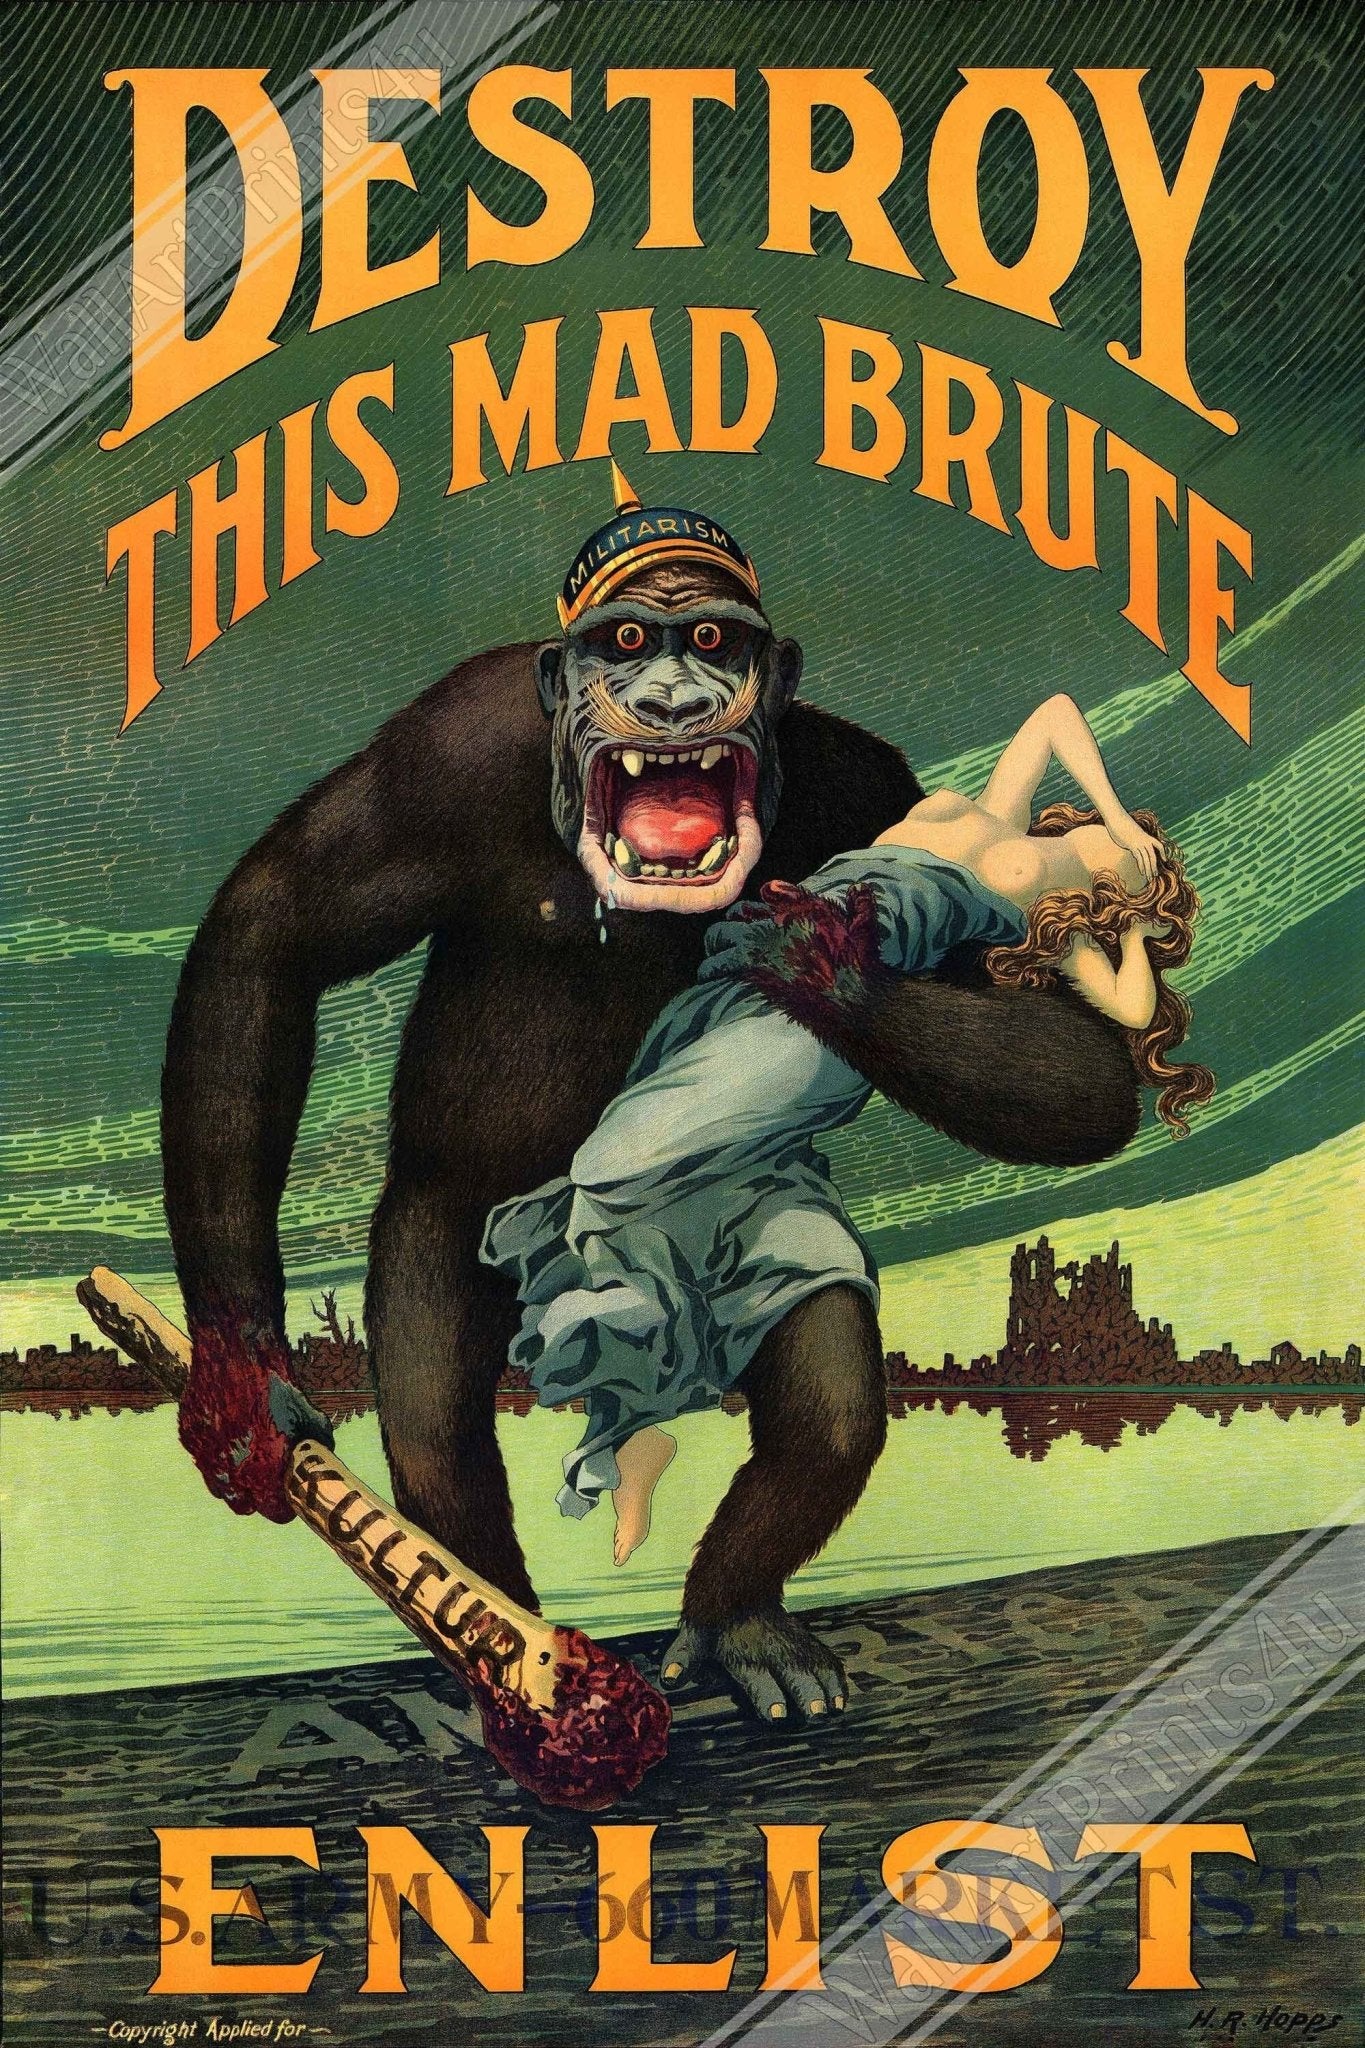 Destroy Mad Brute Poster, World War 1 Propaganda Poster Print, Vintage Poster 1917 - WallArtPrints4U